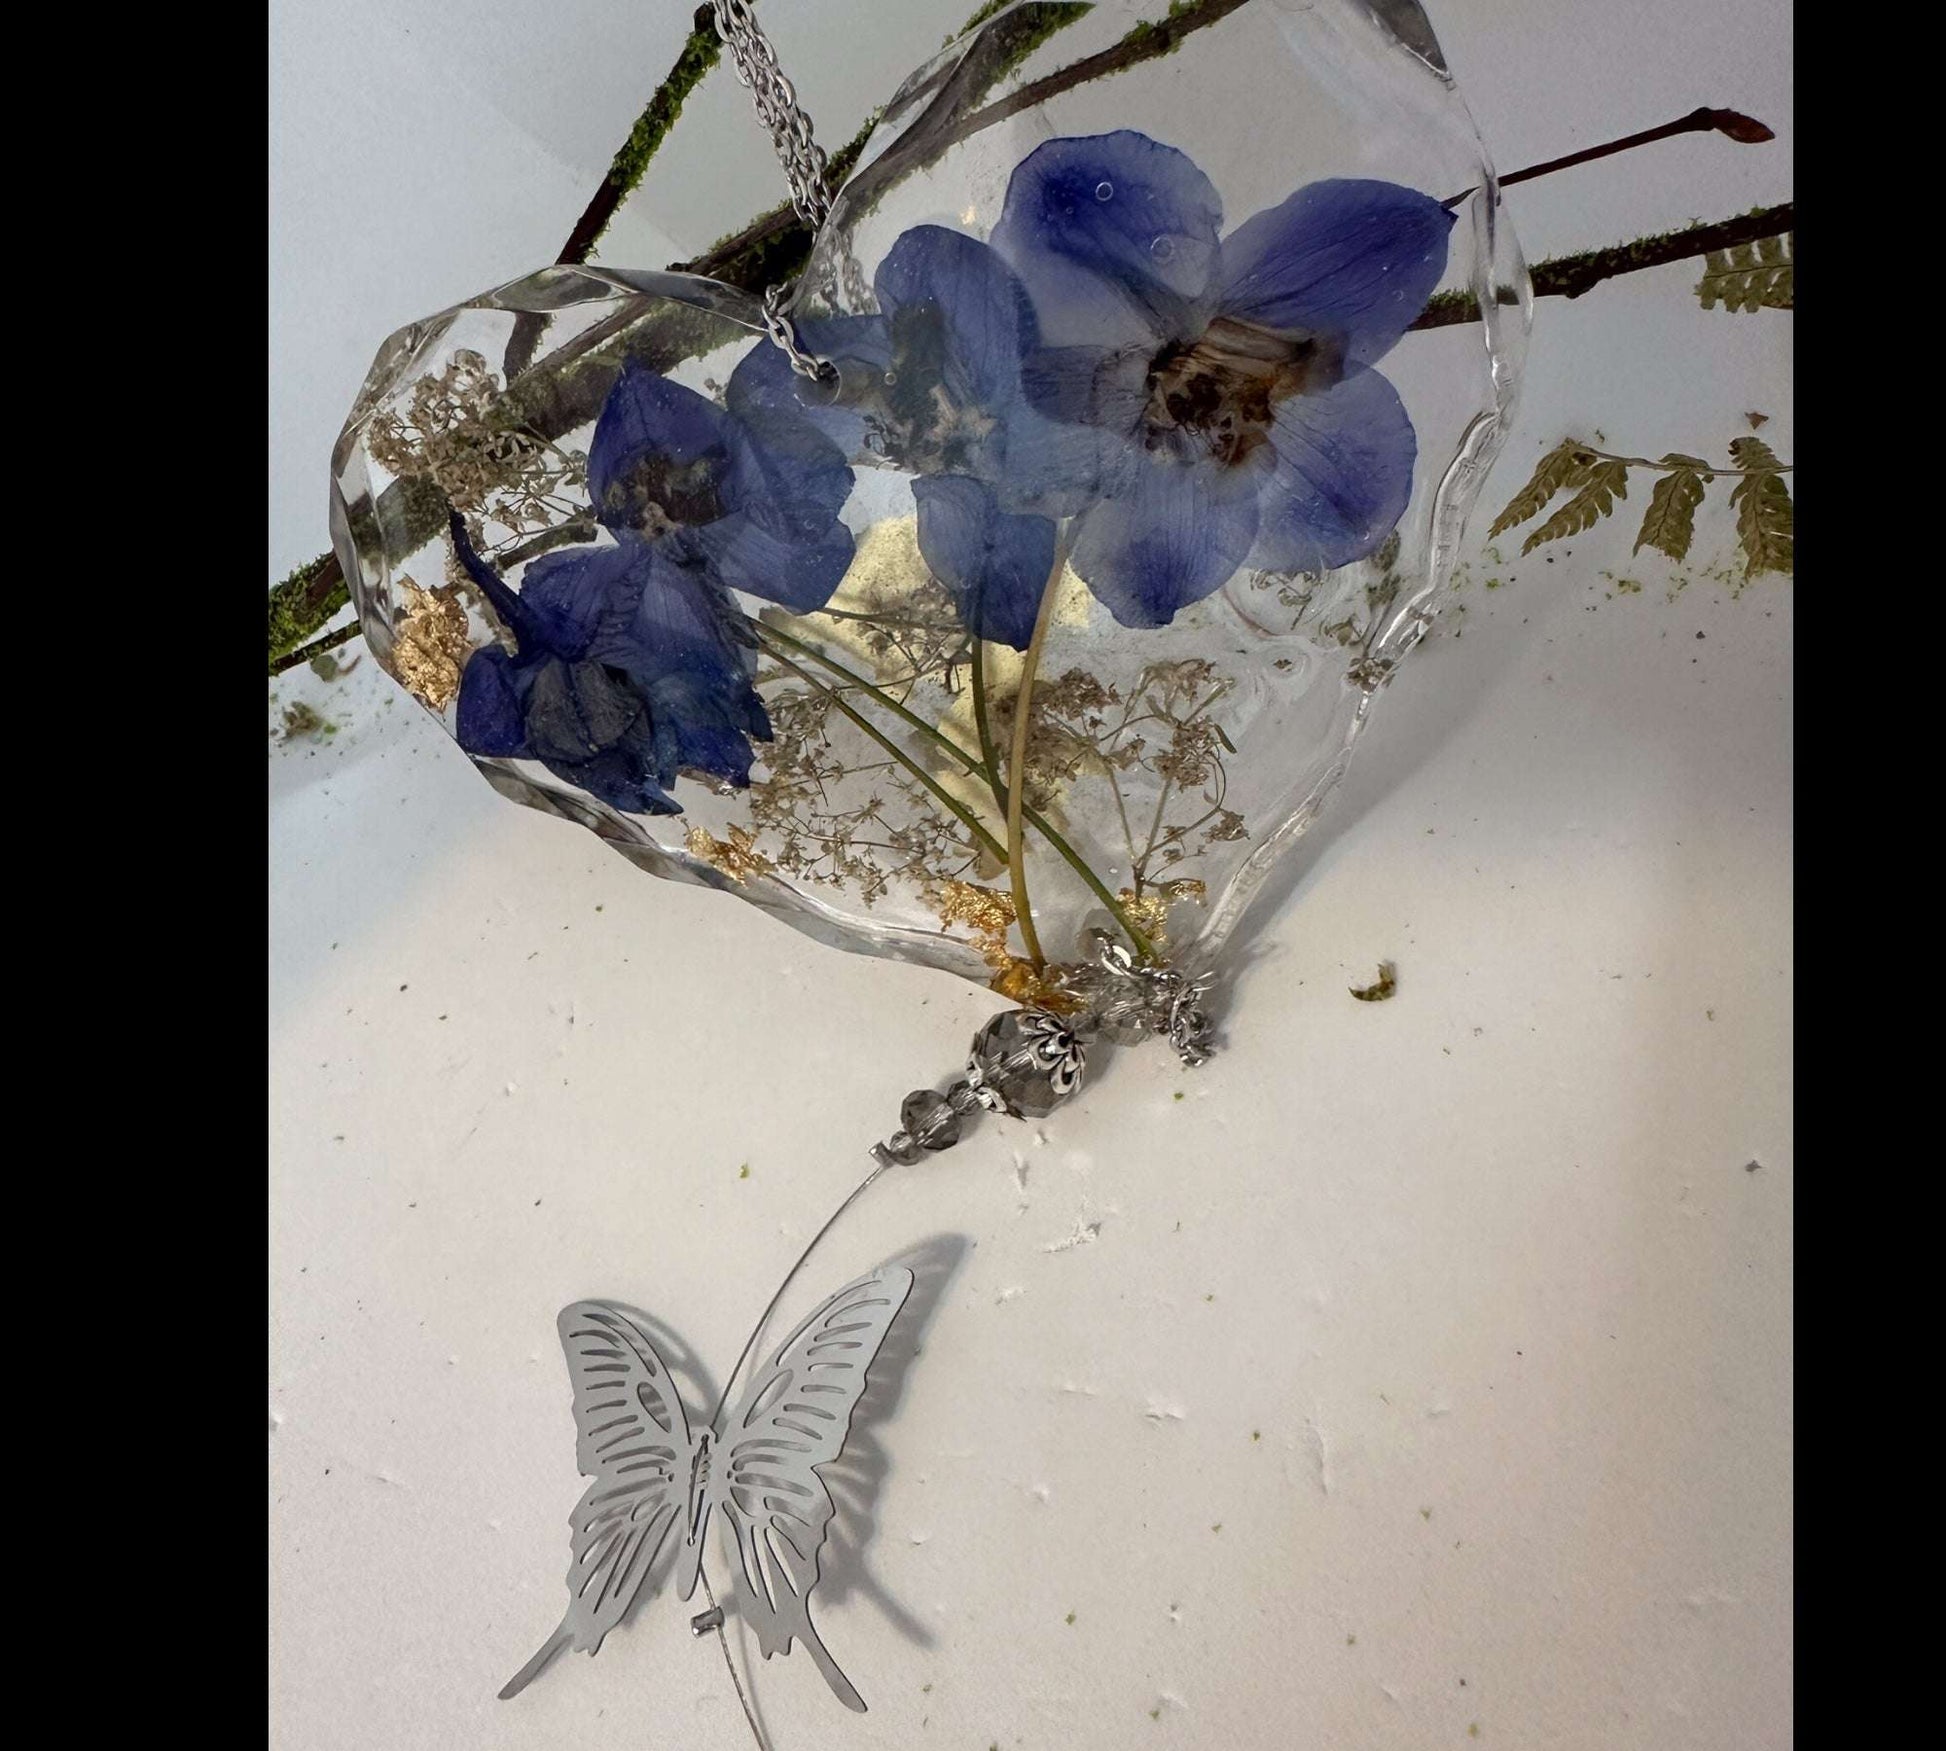 Floral Dreams Heart Suncatcher: Handcrafted Resin Pressed Flower Decor